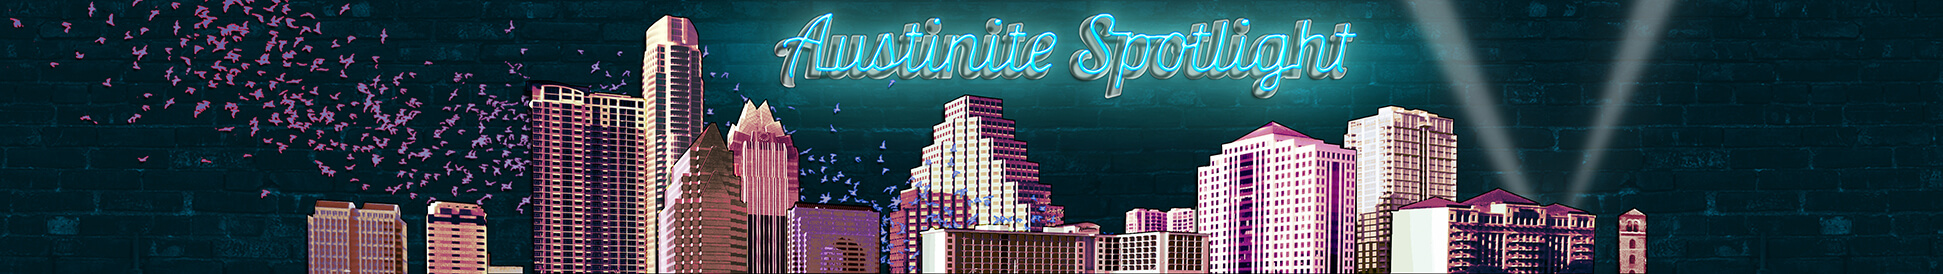 Austinite Spotlight